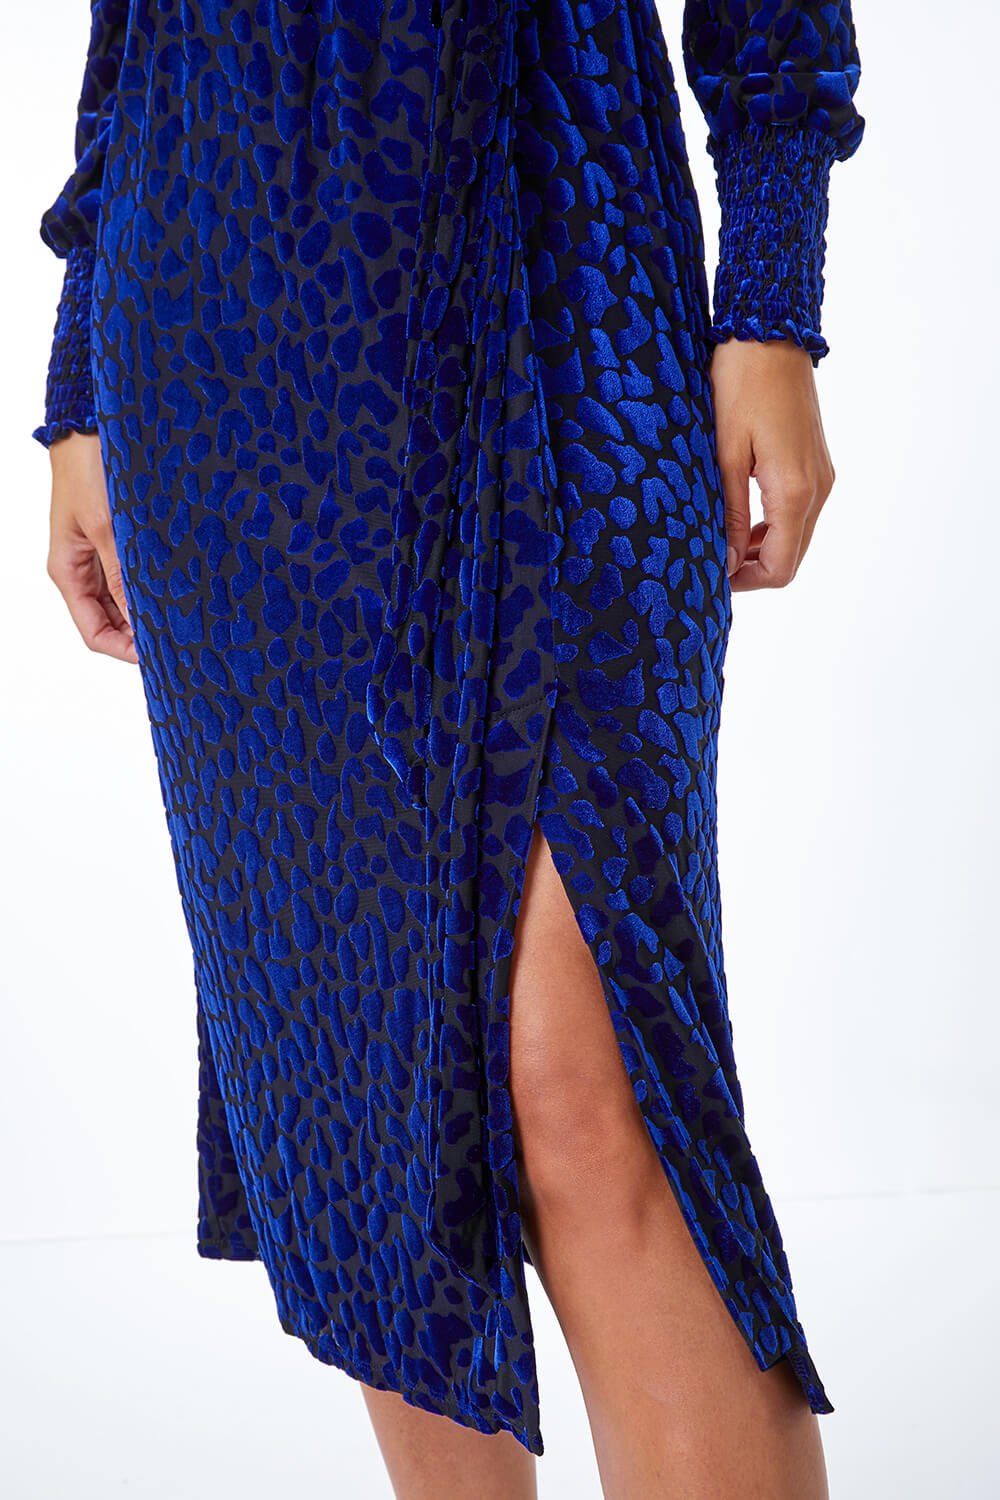 Blue Animal Velvet Stretch Wrap Dress, Image 5 of 5